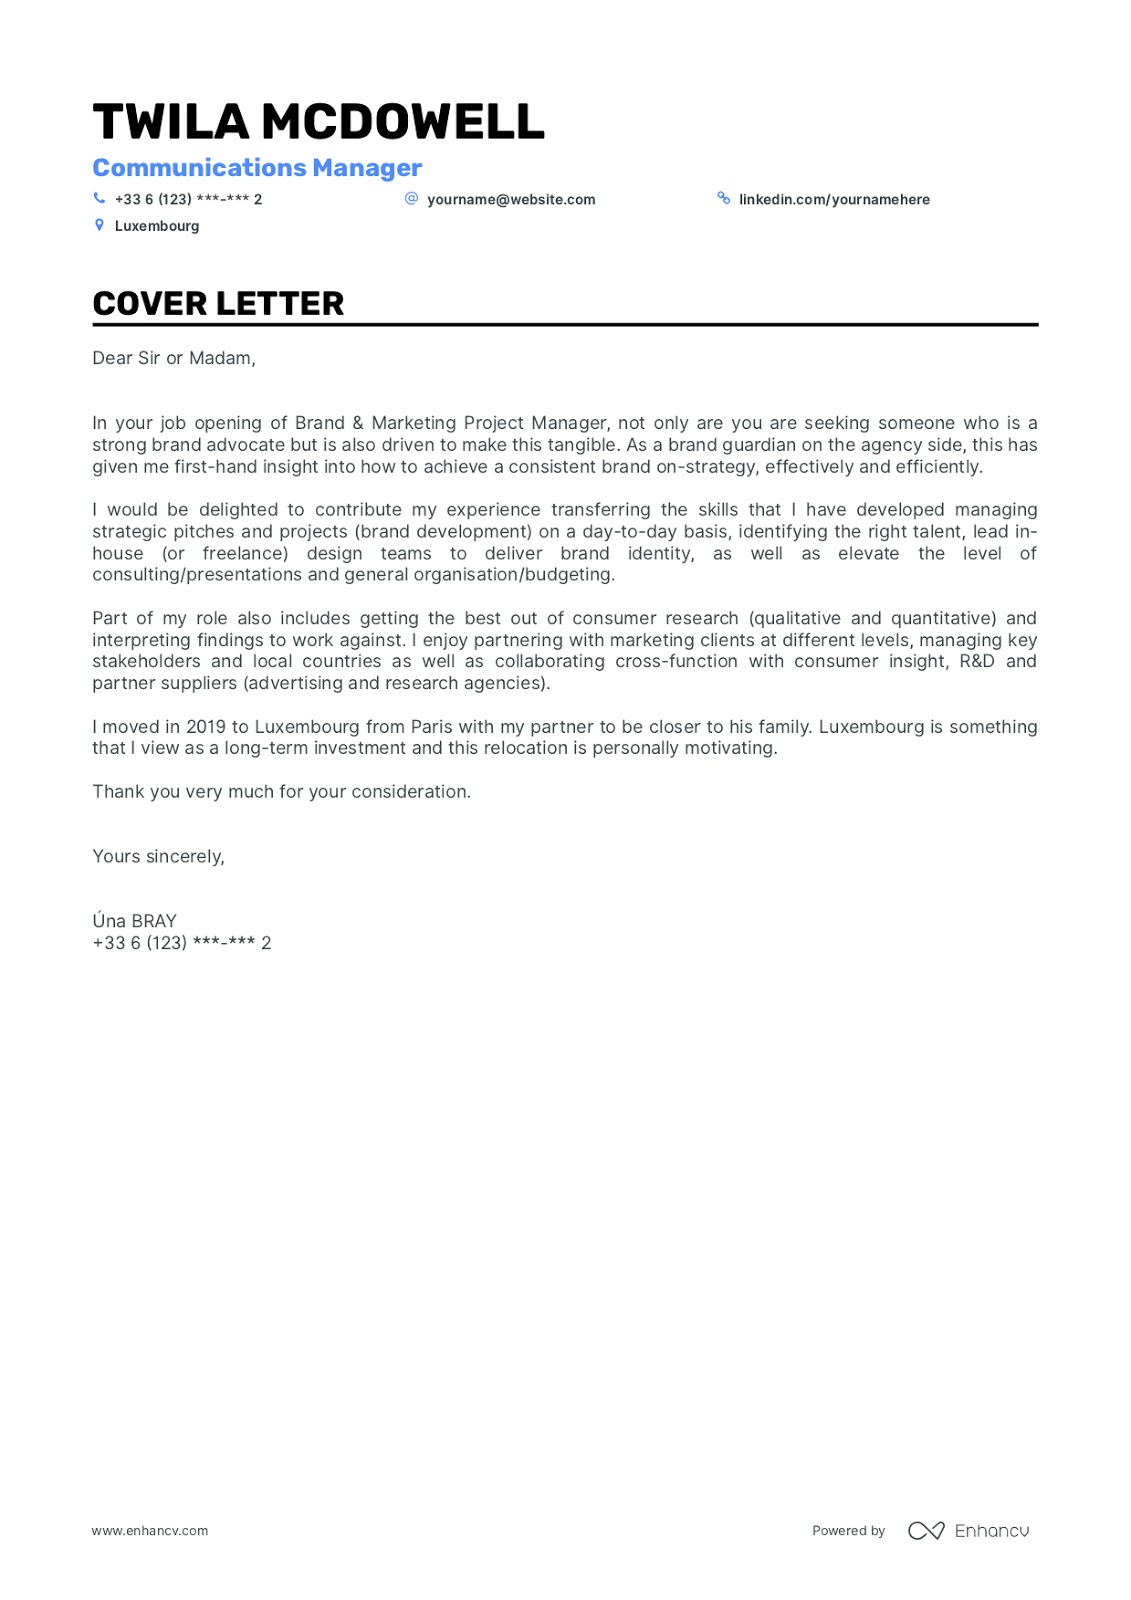 Enhancv Cover Letter Design: 5+ Tips & Examples for Success Cover letter design